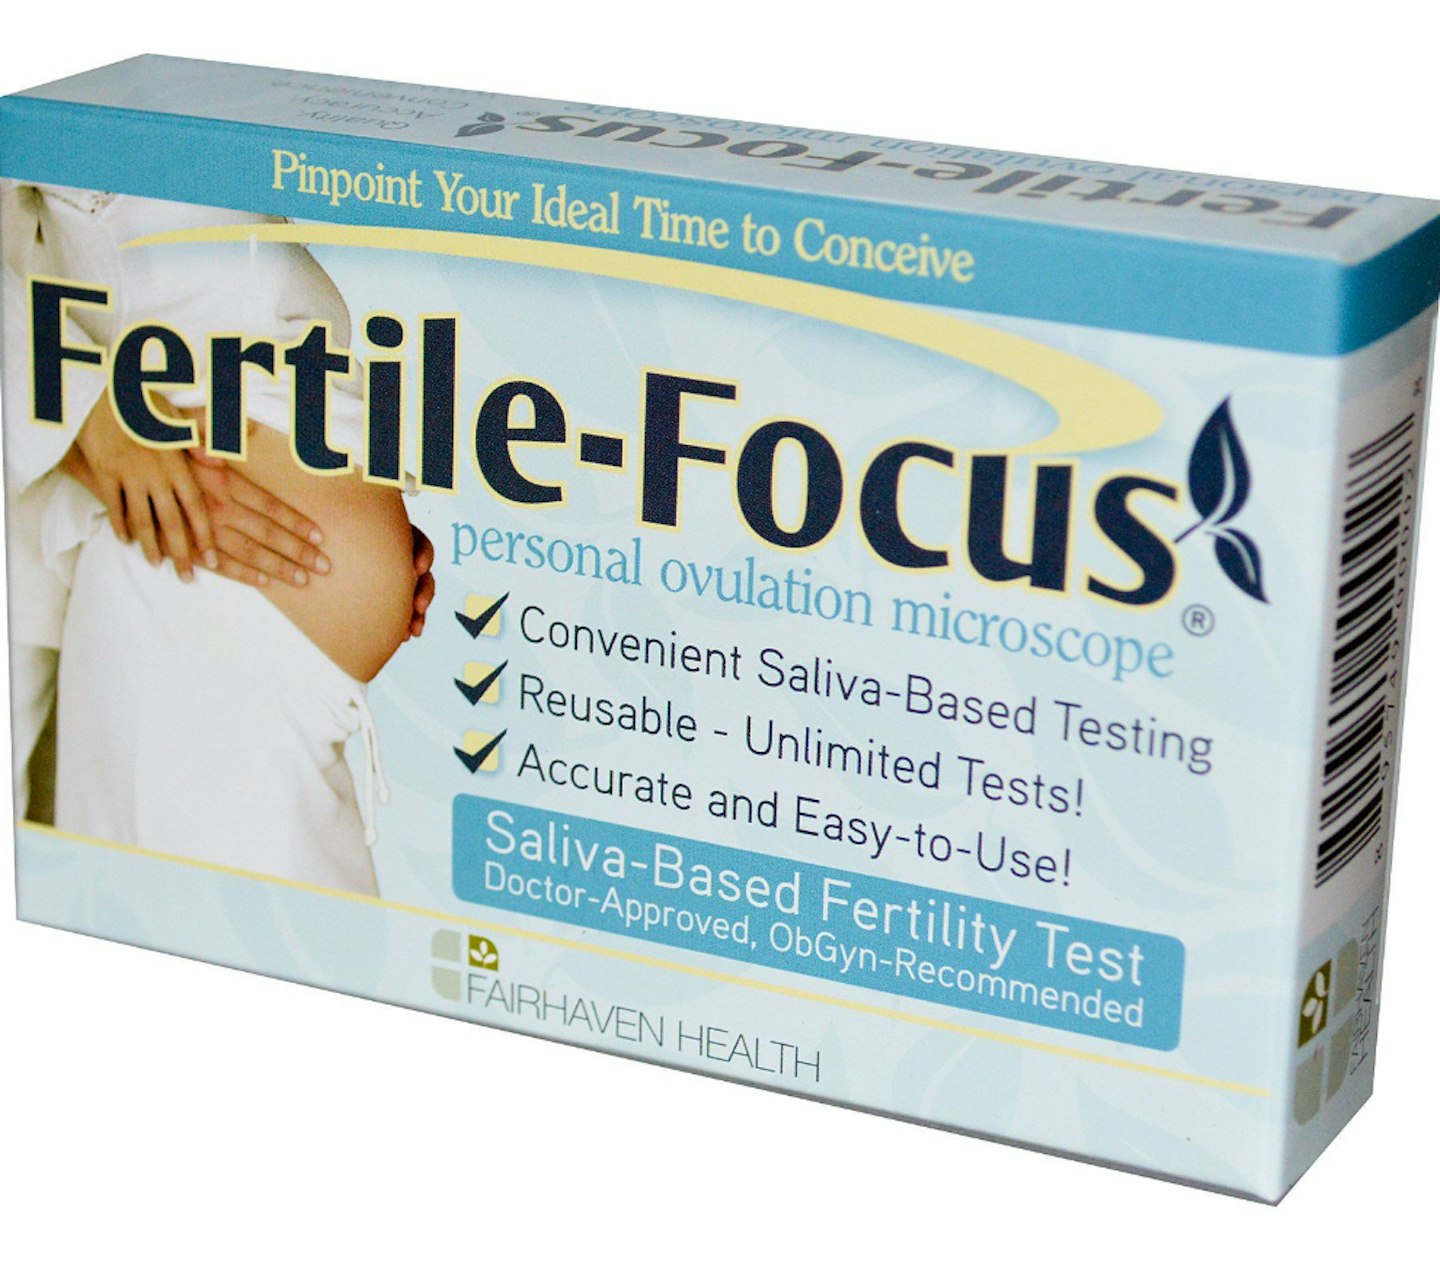 Fairhaven Health Fertile-Focus Ovulation Microscope